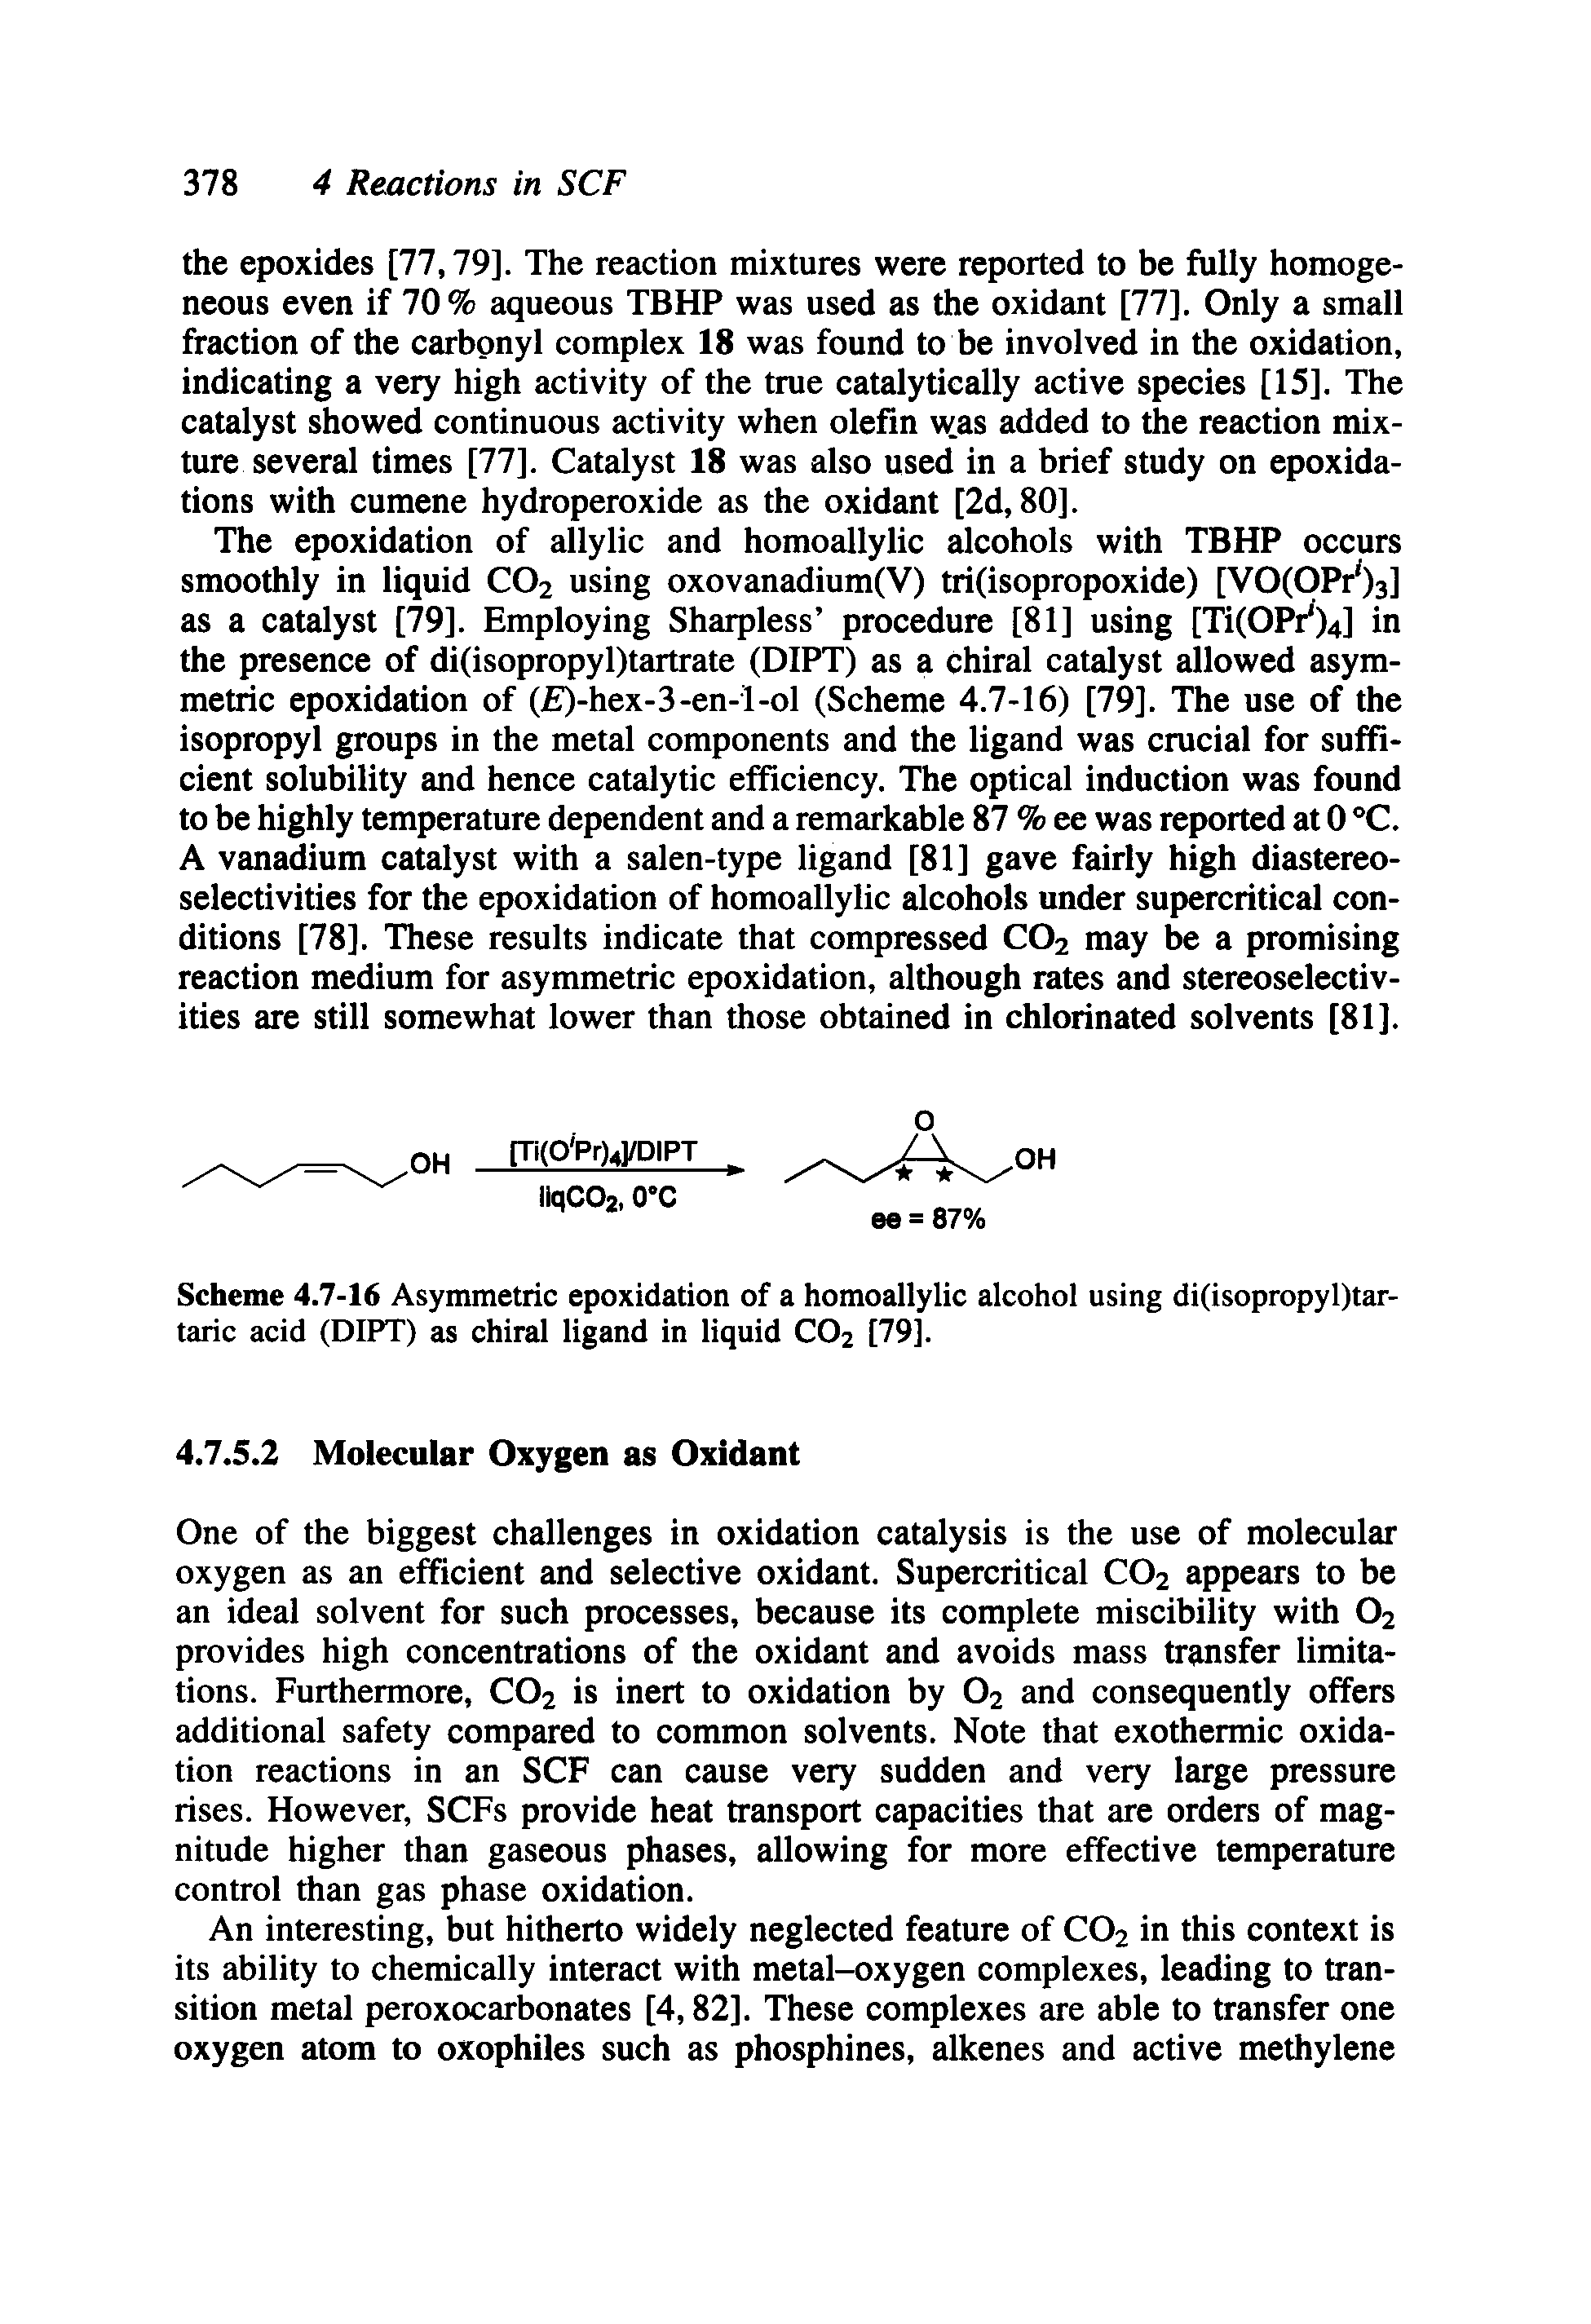 Scheme 4.7-16 Asymmetric epoxidation of a homoallylic alcohol using di(isopropyl)tar-taric acid (DIPT) as chiral ligand in liquid CO2 [79].